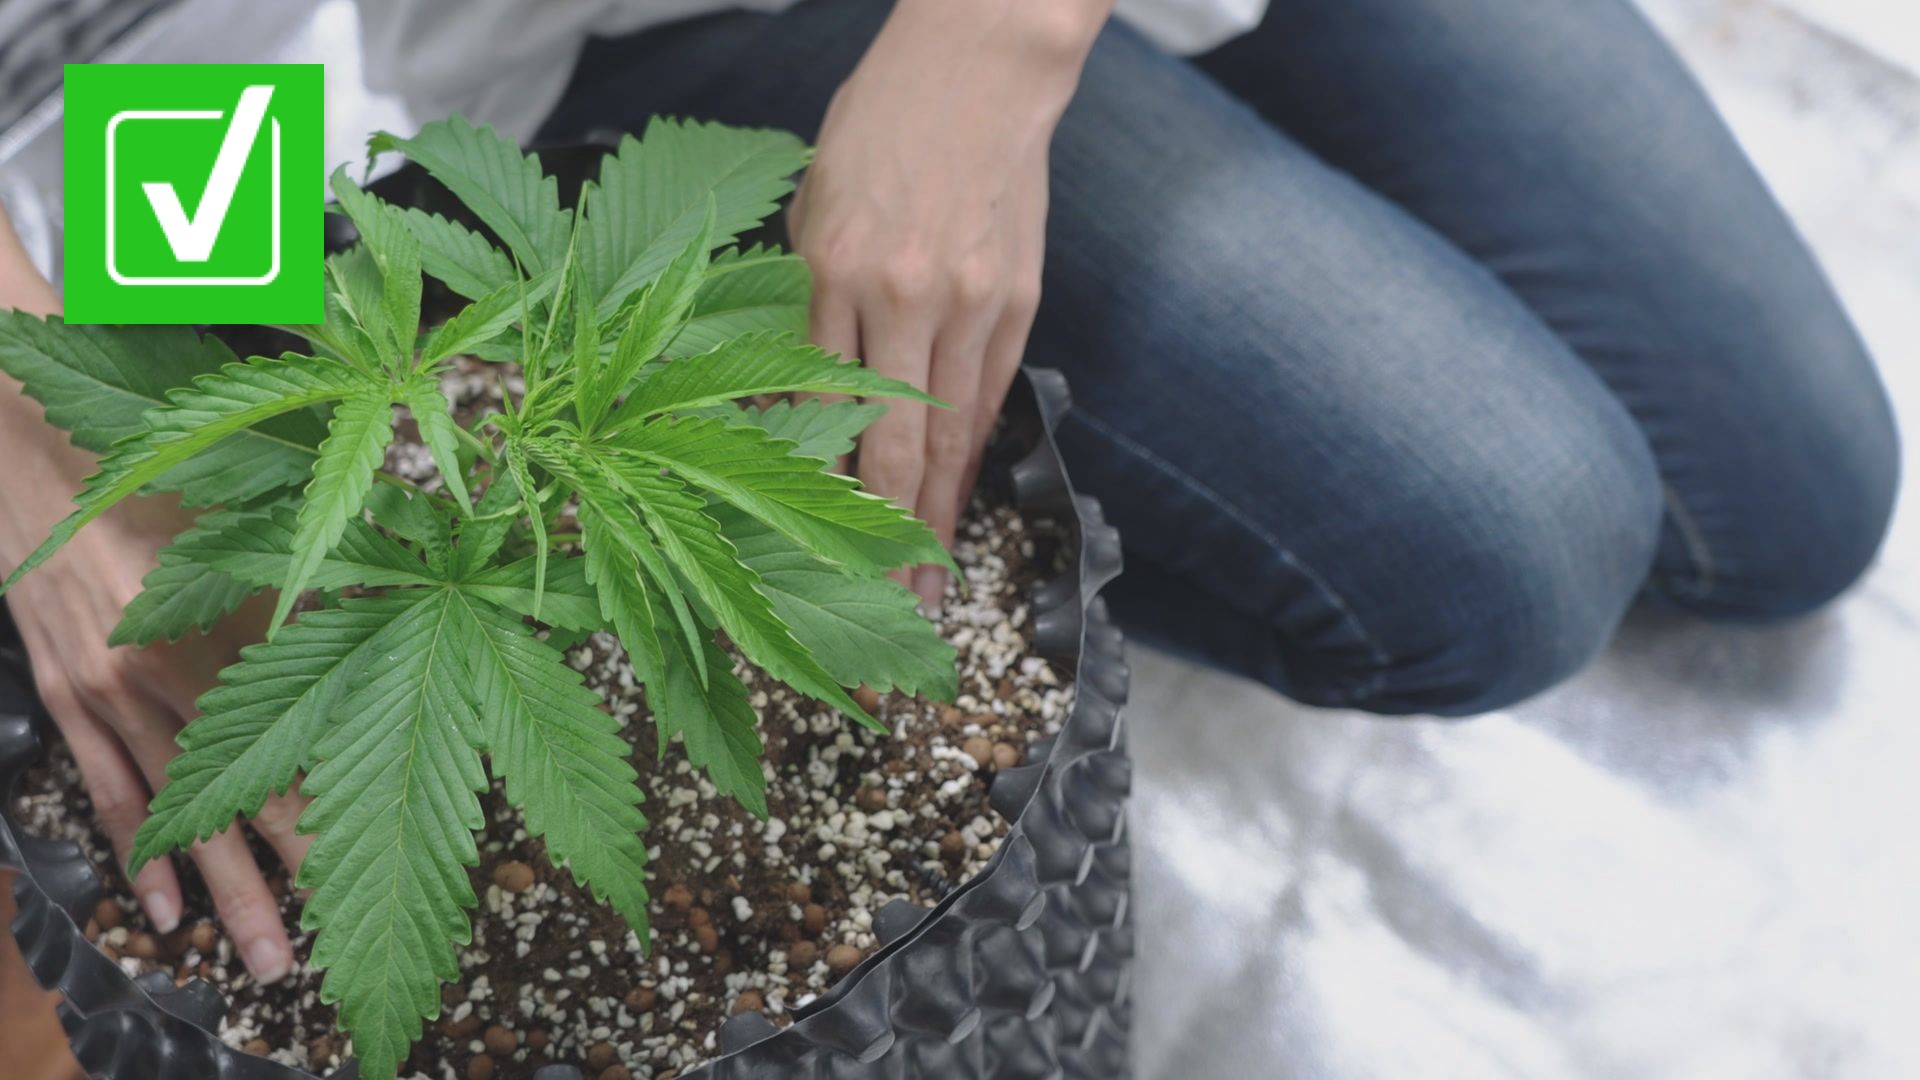 Pot laws in IL: Can you grow marijuana if you rent your home? | ksdk.com